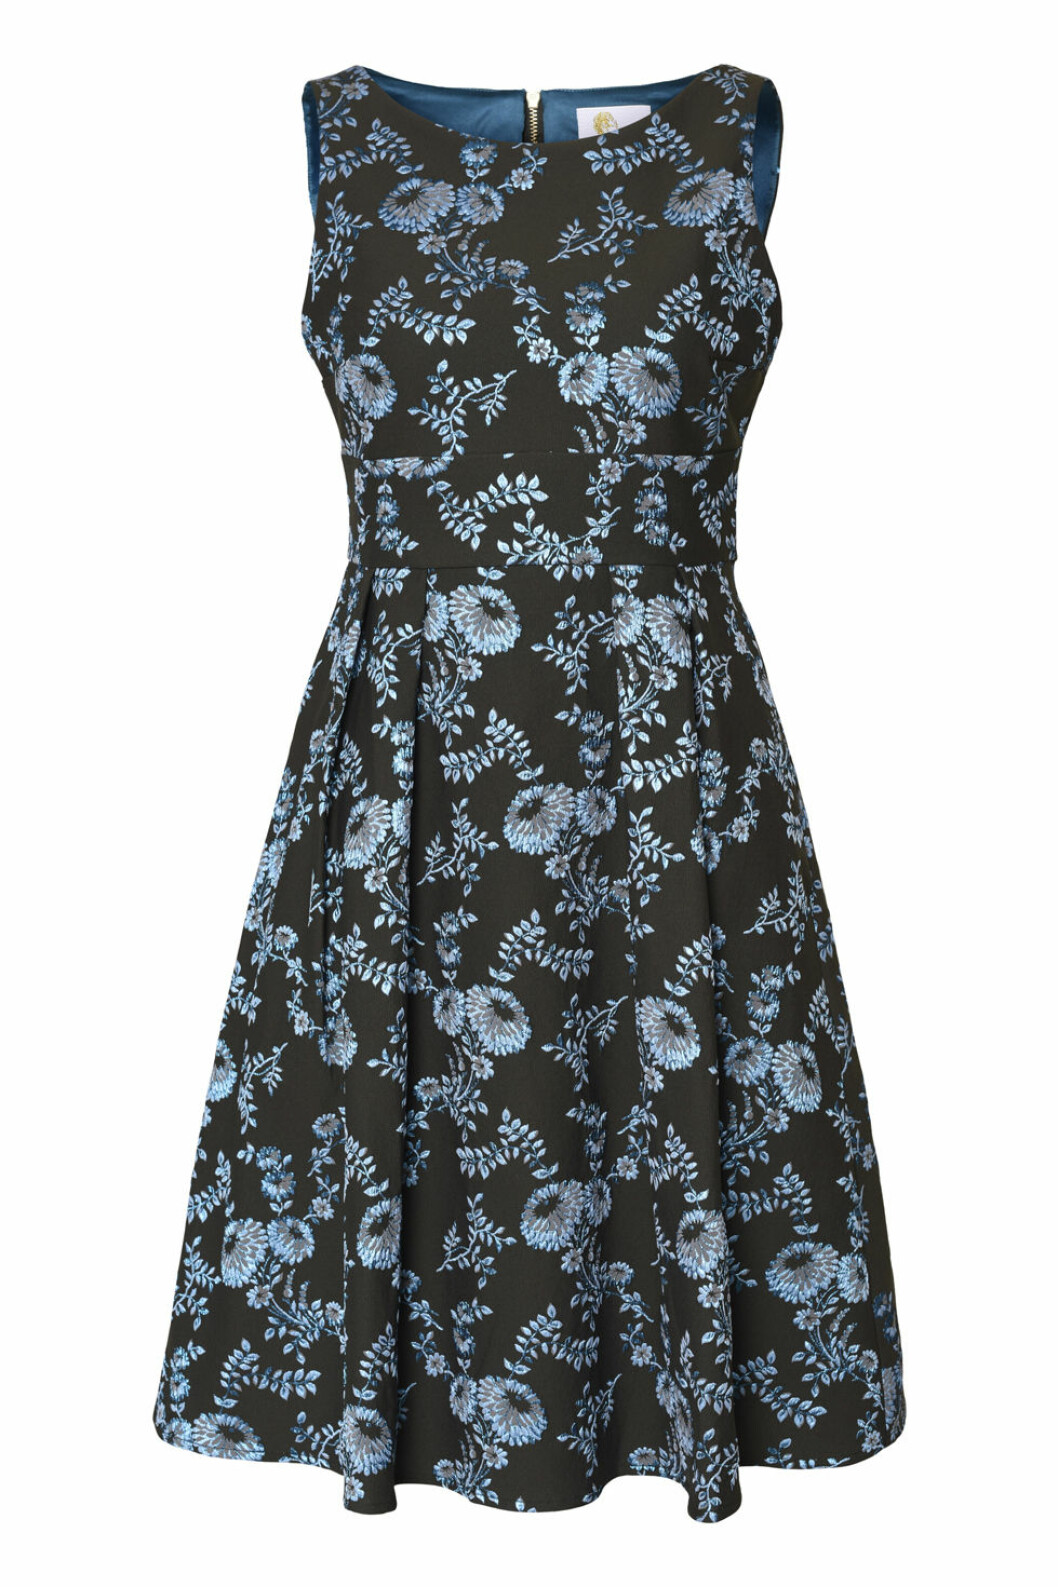 Maria Westerlind x MQ blommig klänning